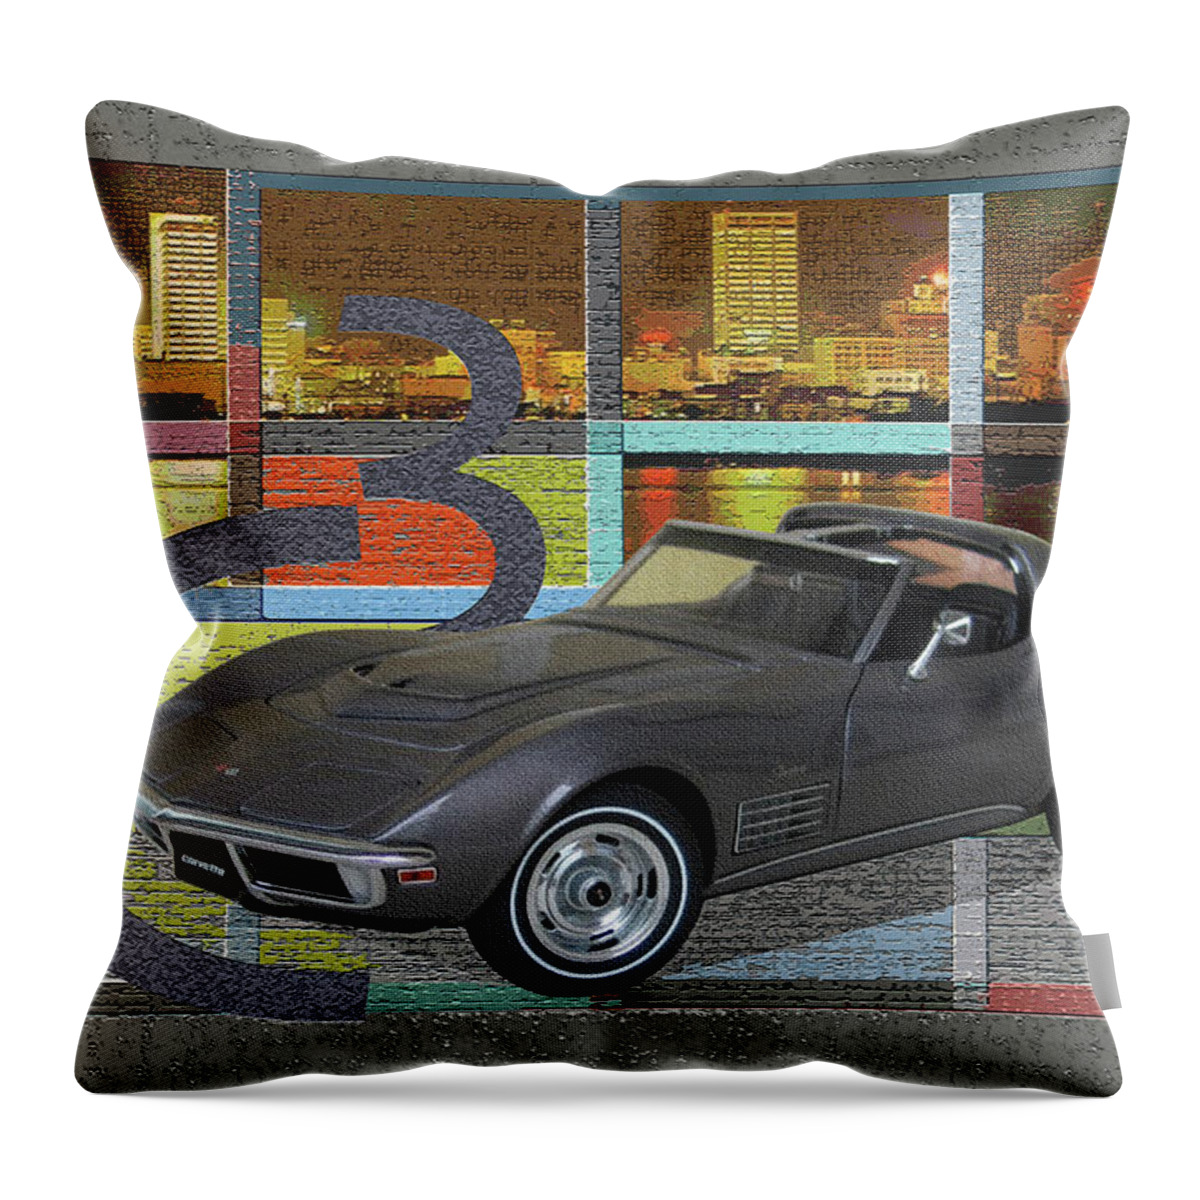 Autoart Vettes Throw Pillow featuring the digital art AUTOart Vettes / C3hree by David Squibb